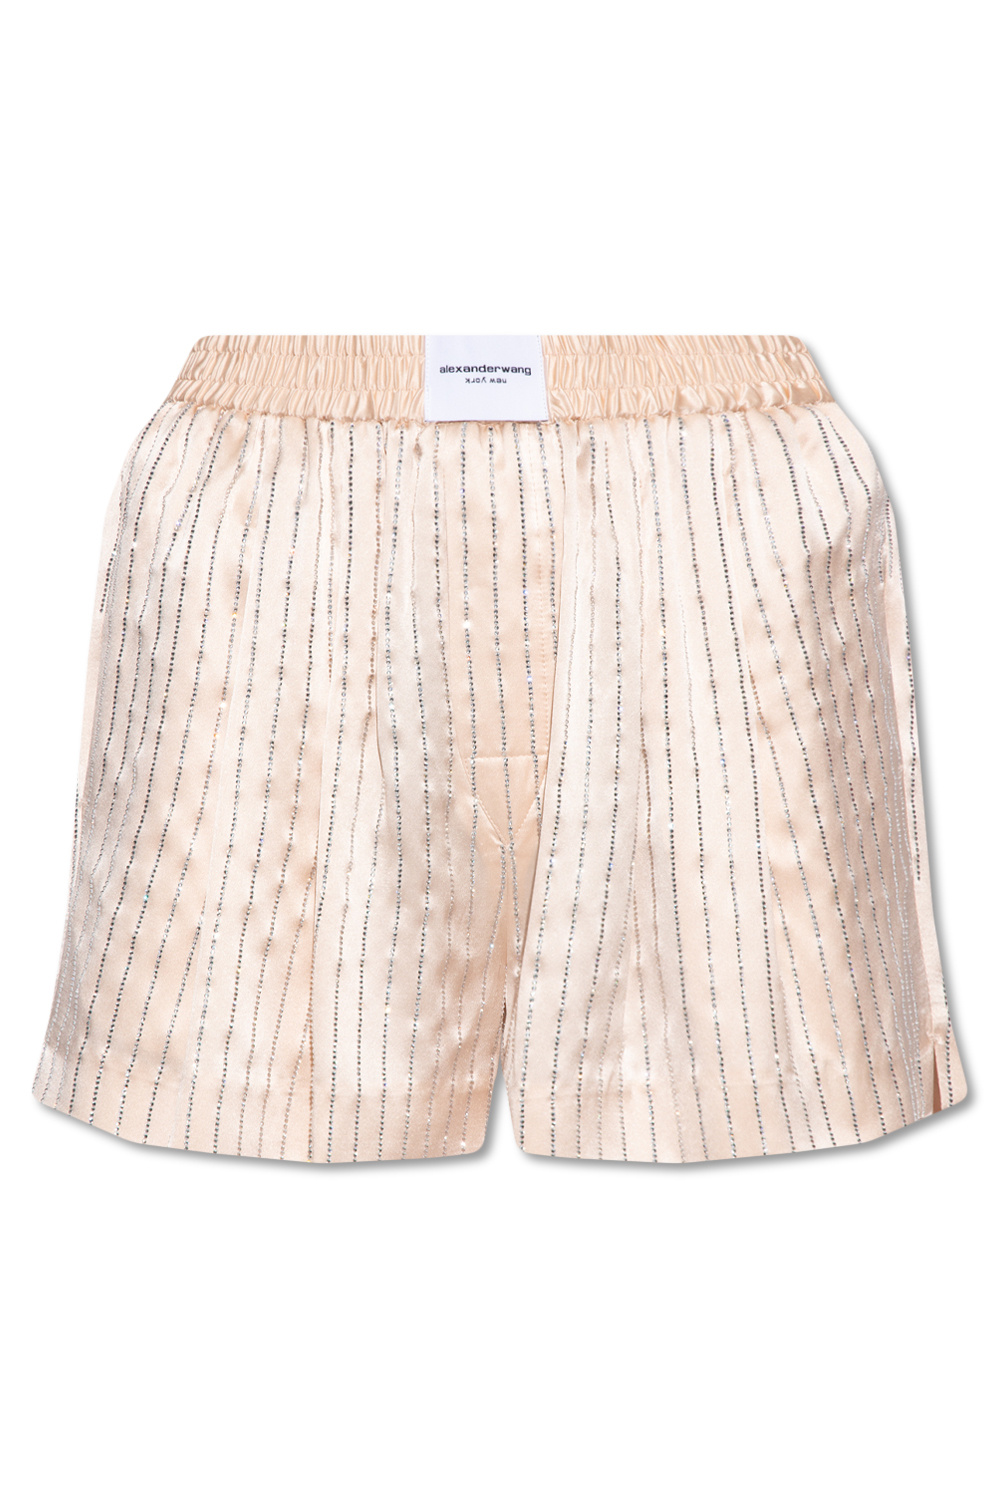 Alexander Wang Silk shorts